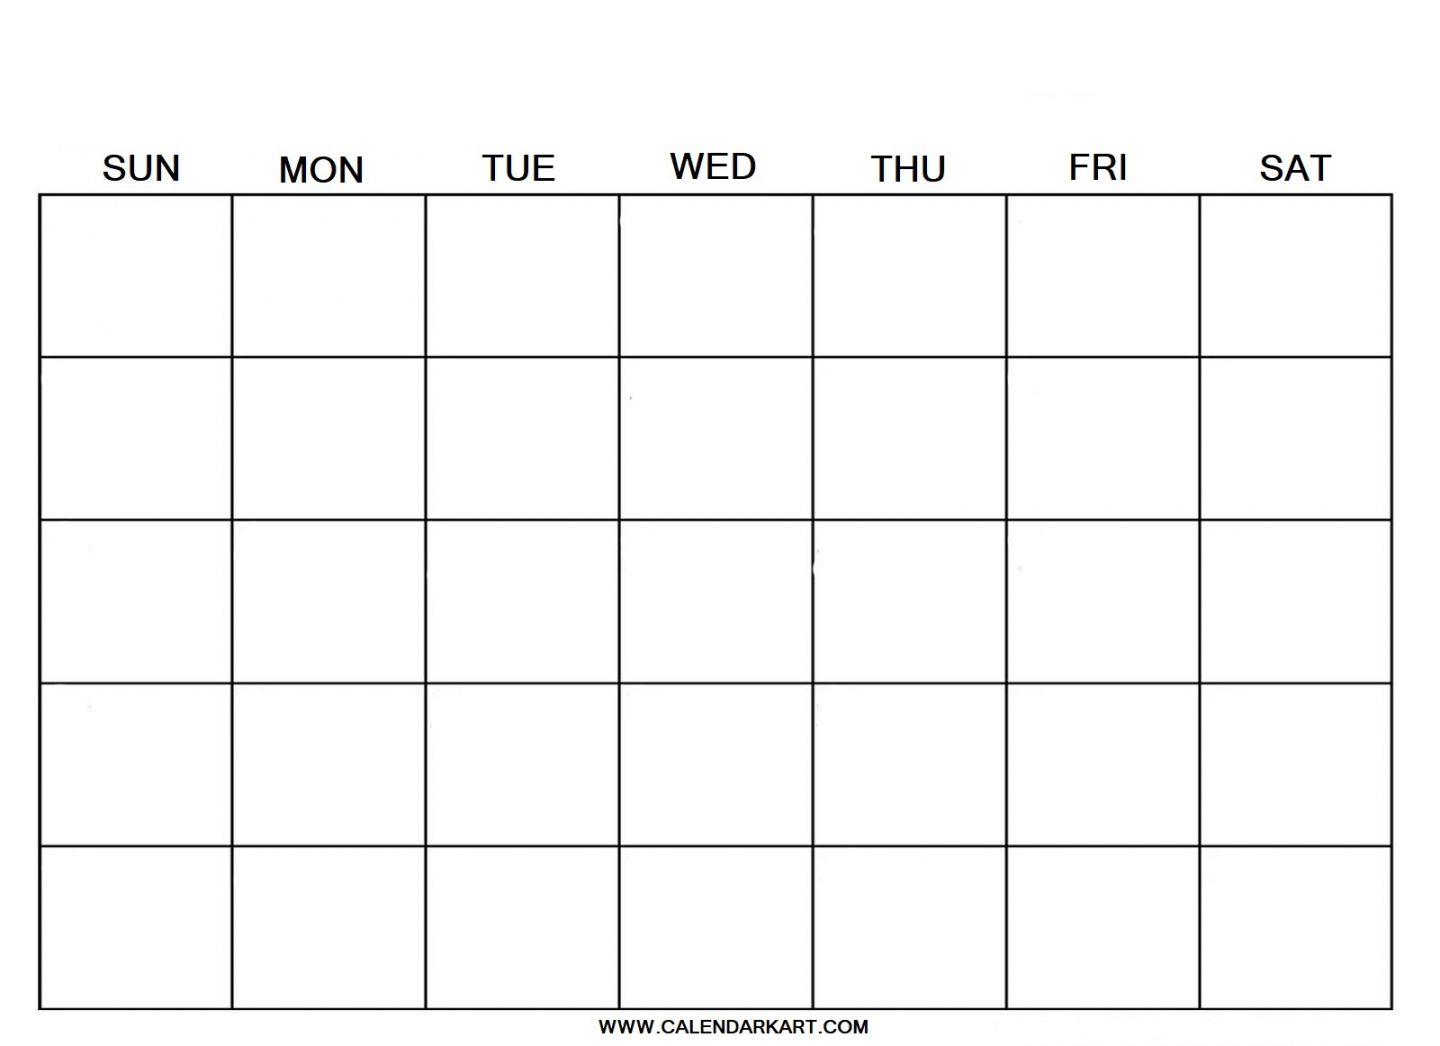 Blank Calendar Printable Free - Printable - Free Printable Blank Calendar Templates - CalendarKart